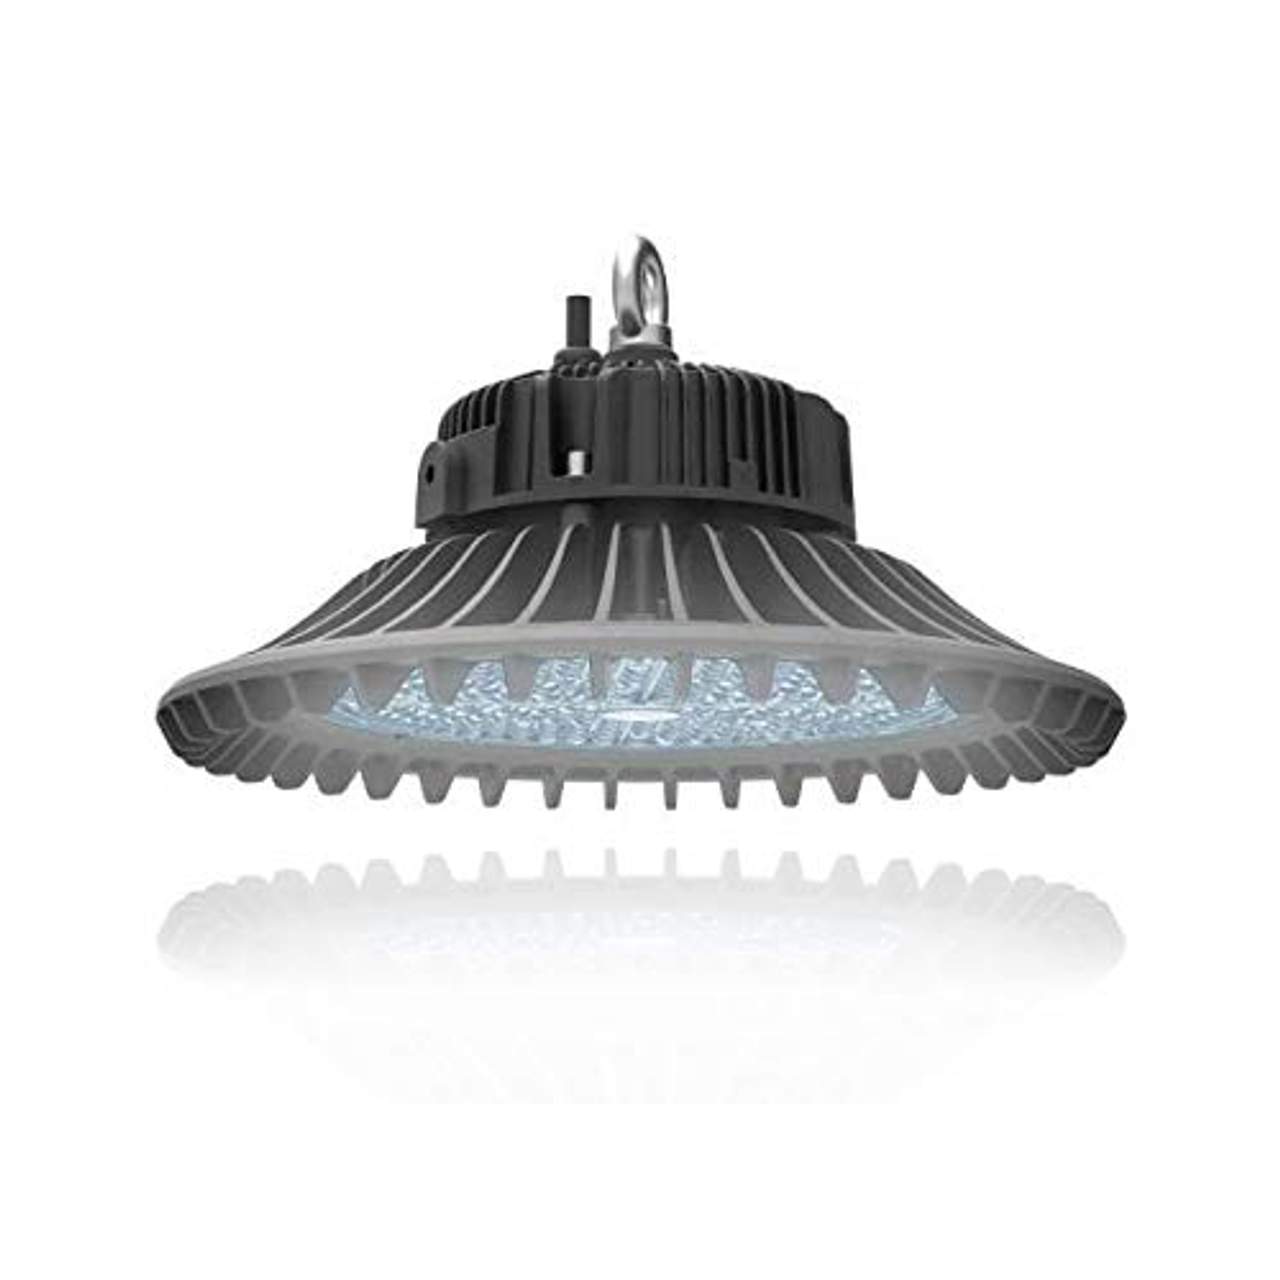 Hallenstrahler UFO Pro 150Watt 5500K IP65 90° Ufostrahler Hallenbeleuchtung